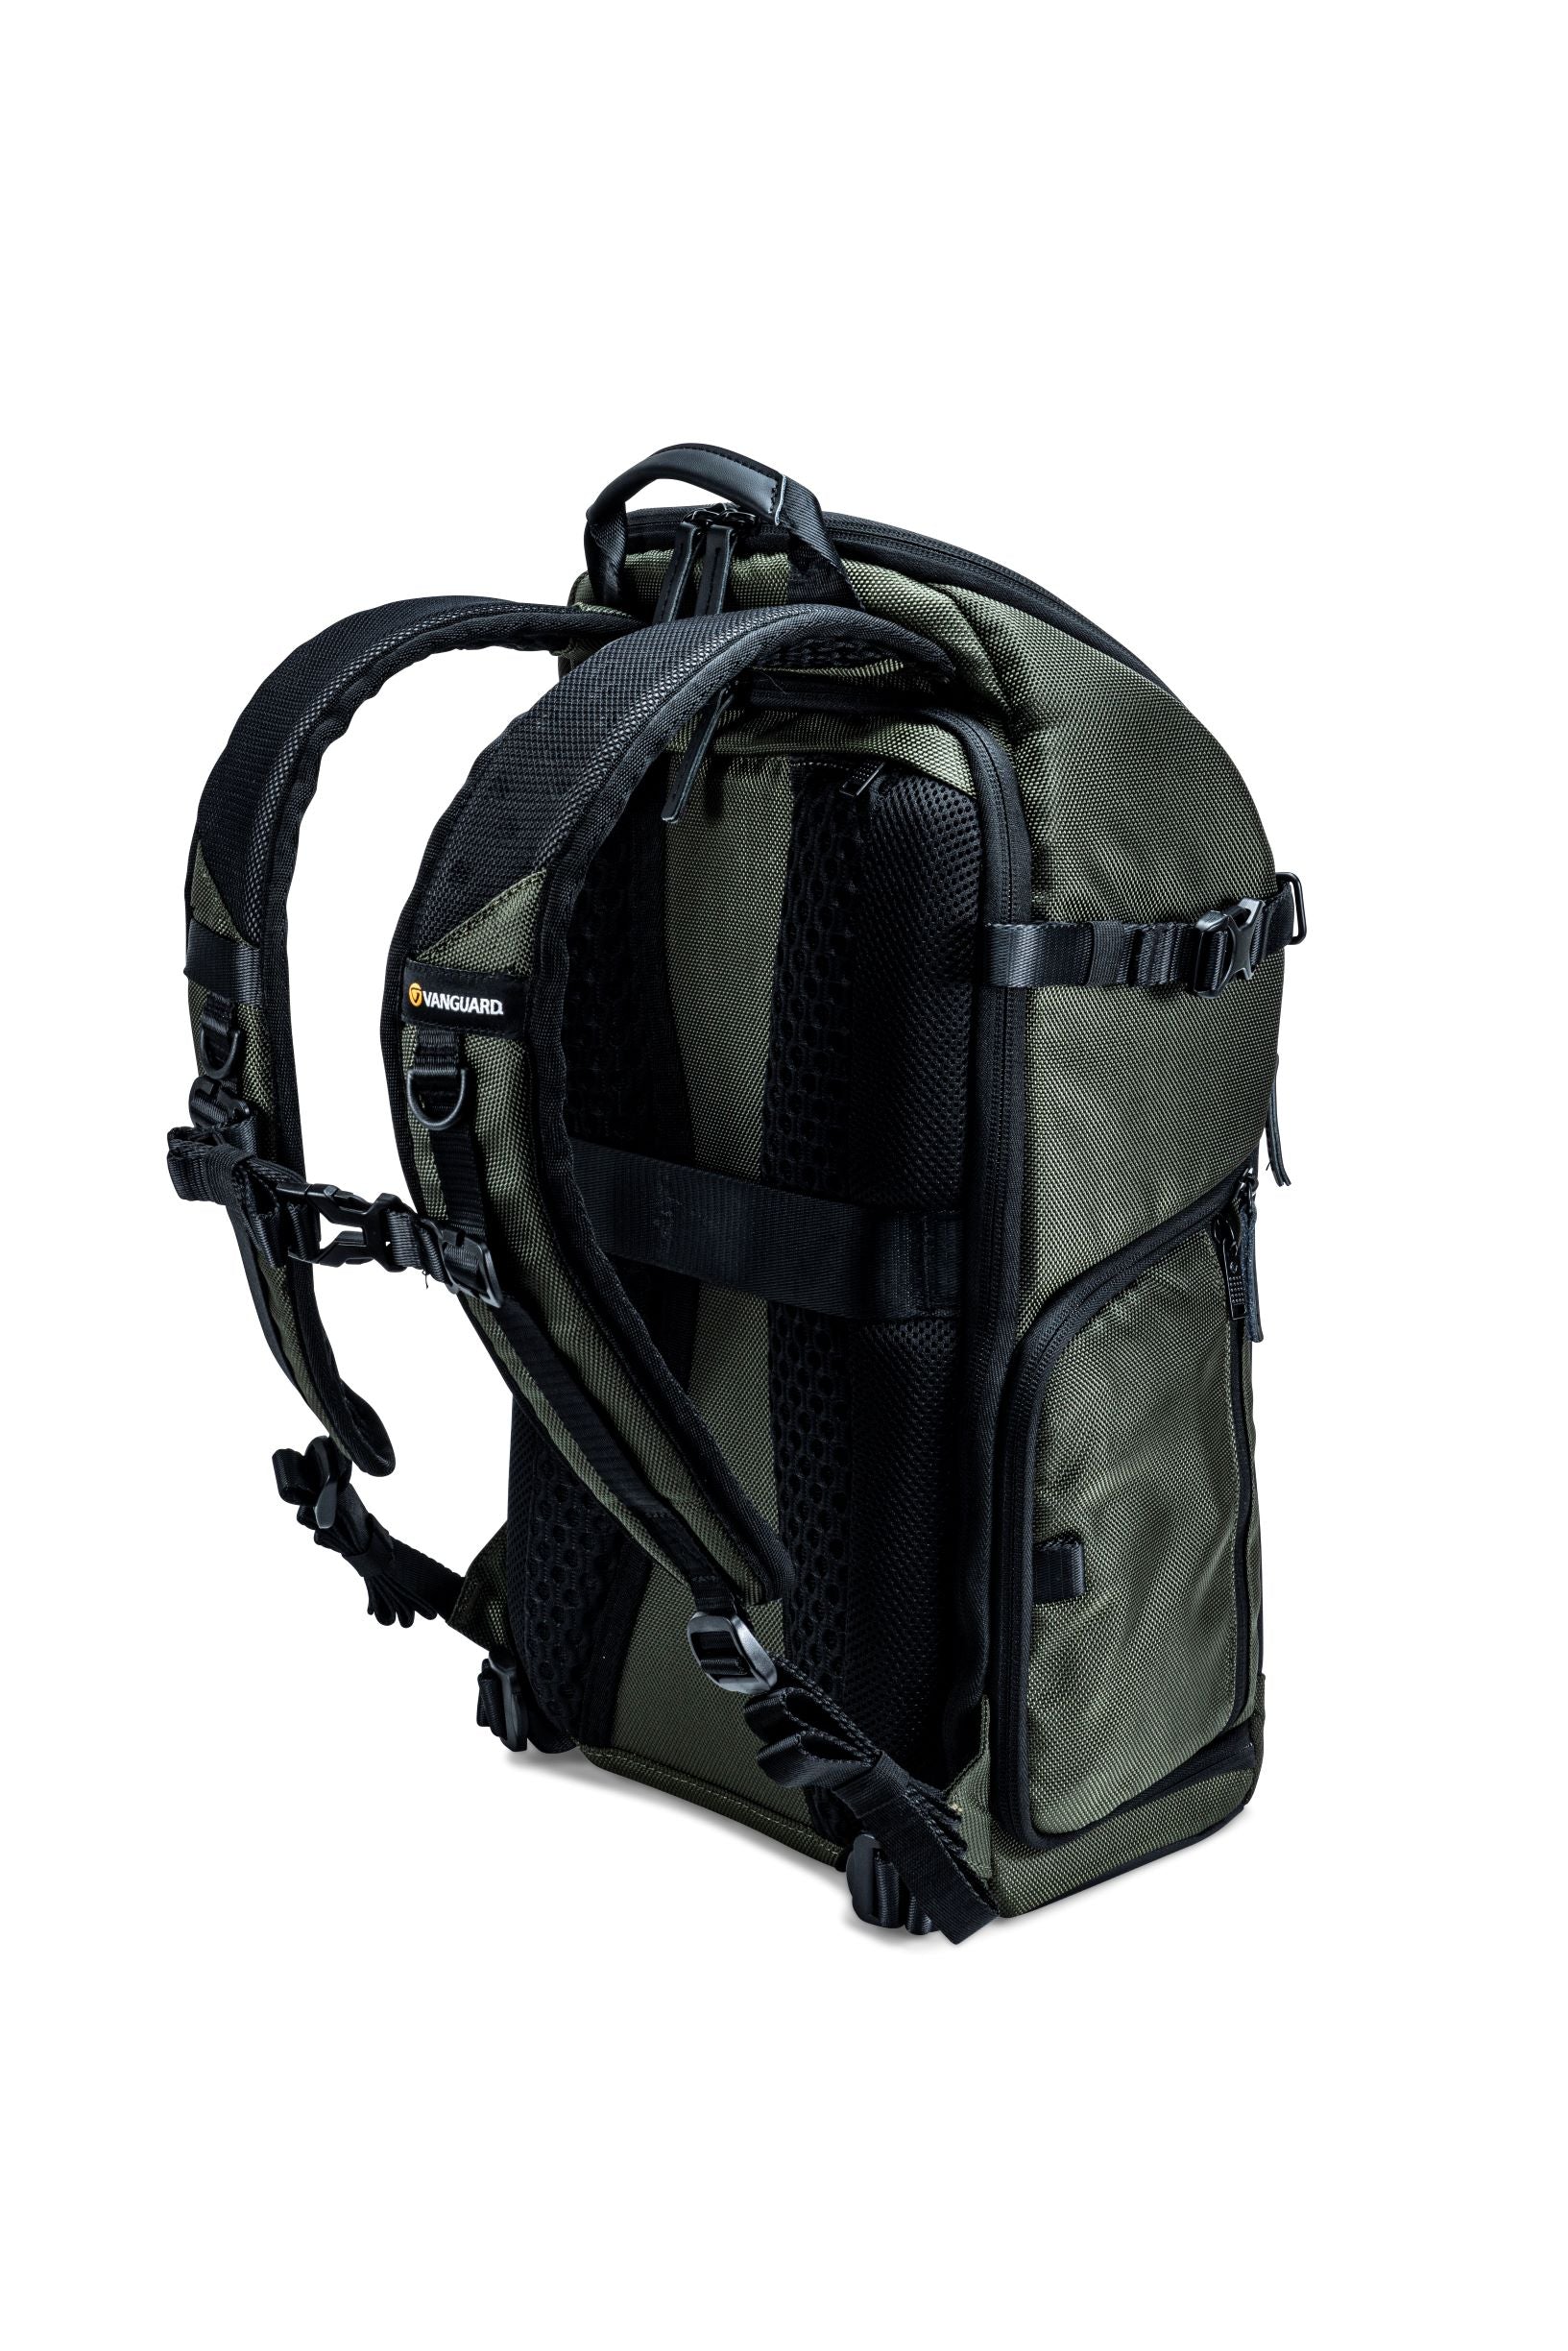 VEO SELECT 46 BR GR Backpack, Green – Vanguard USA